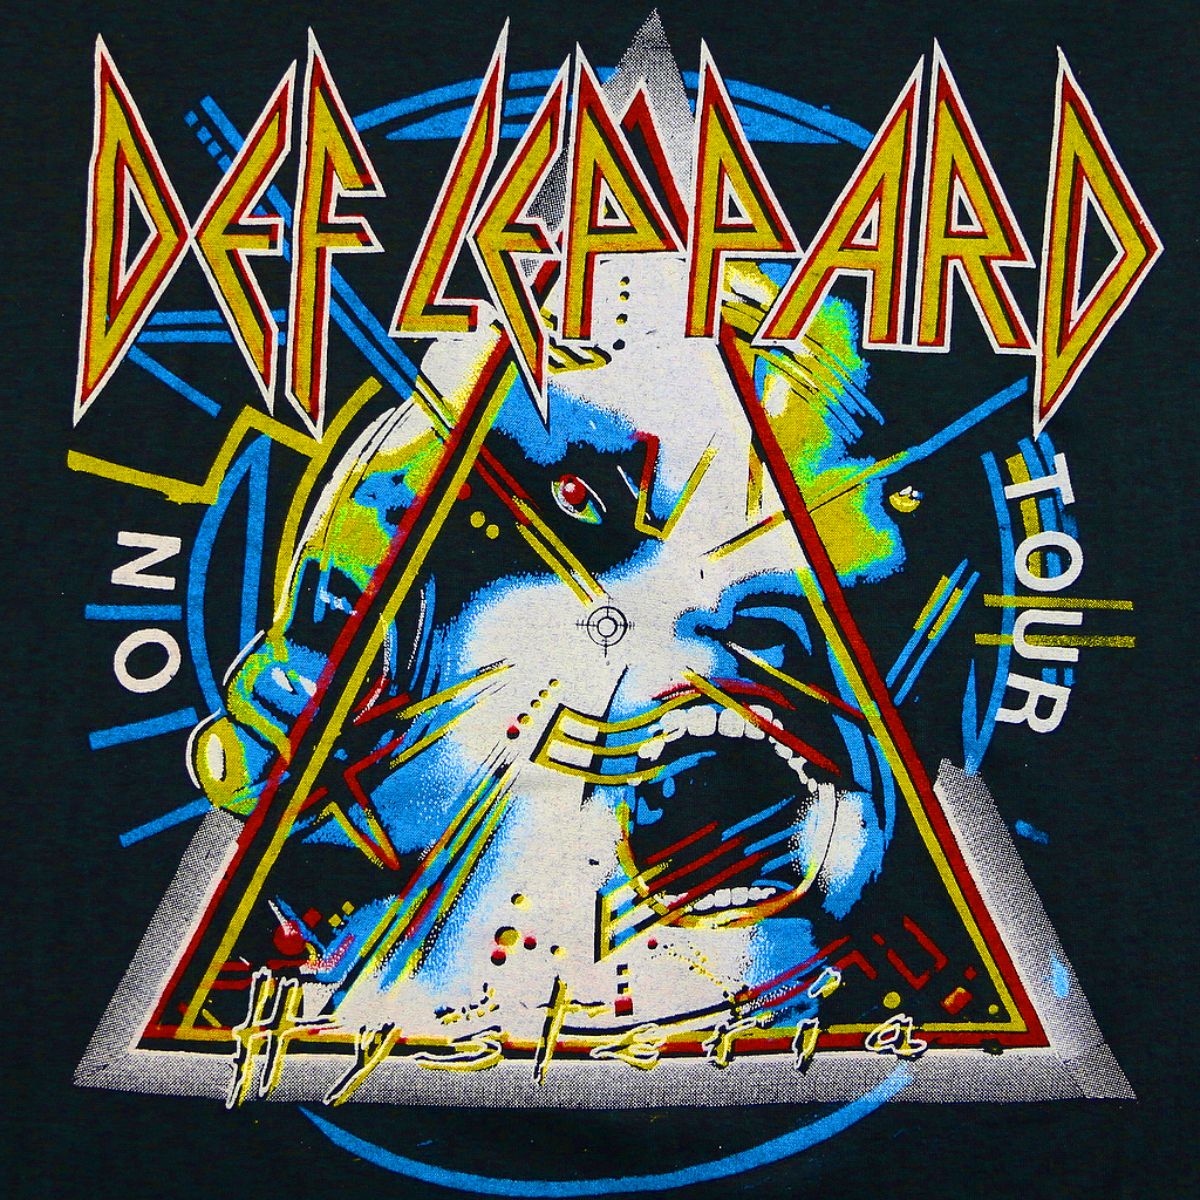 Def Leppard, l'album "Hysteria".